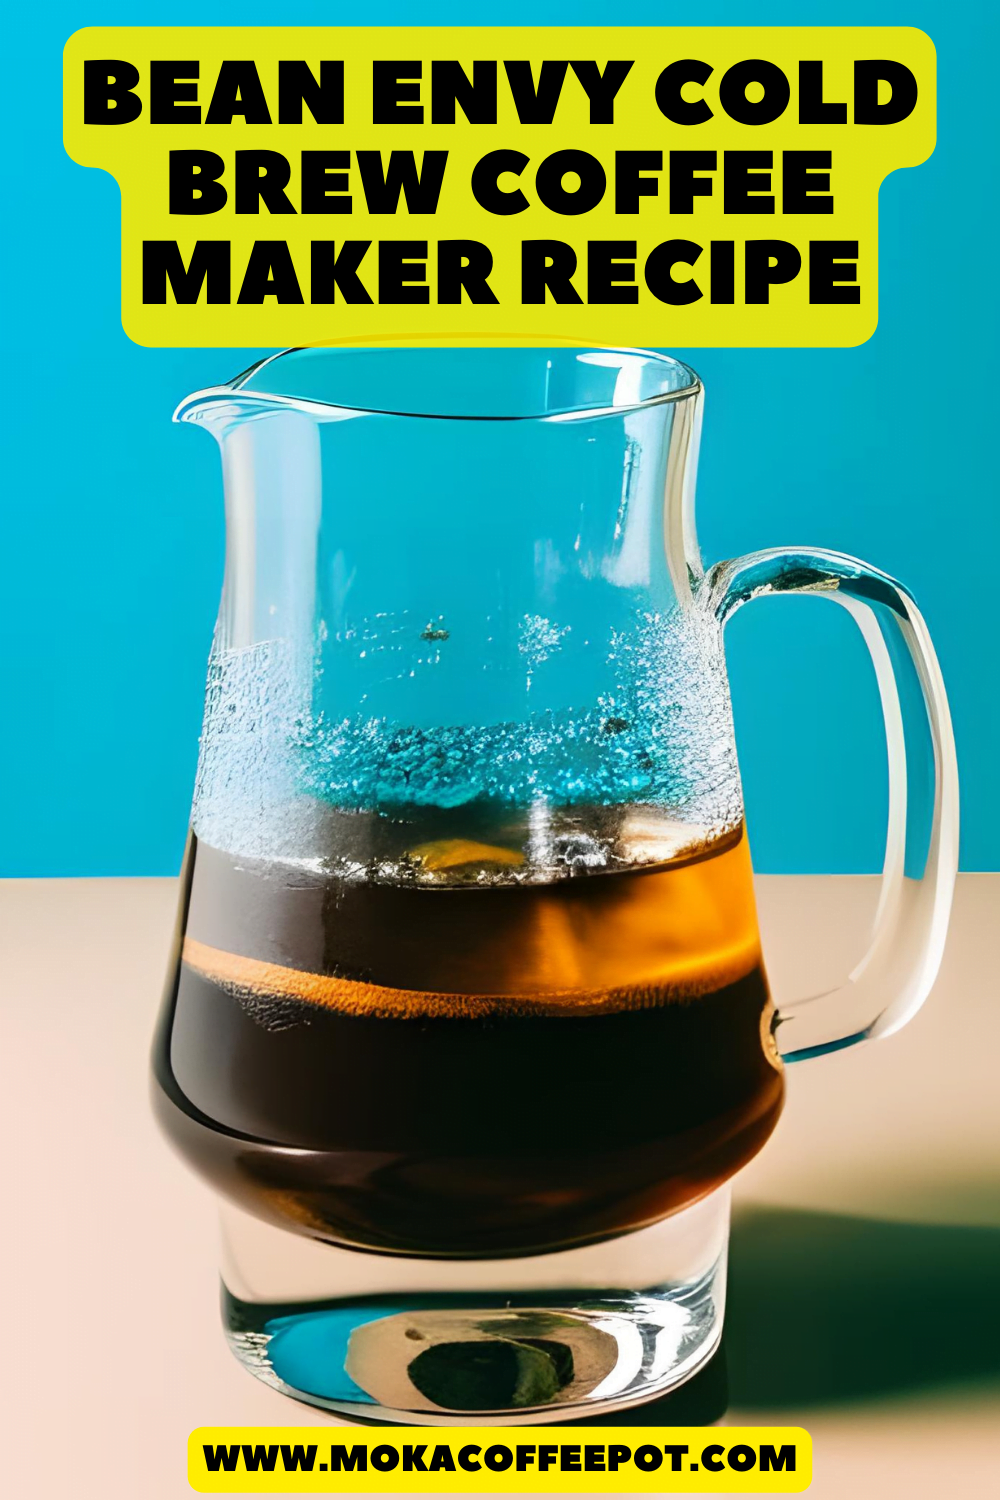 http://www.mokacoffeepot.com/wp-content/uploads/2023/04/Bean-envy-cold-brew-coffee-maker-recipe.png